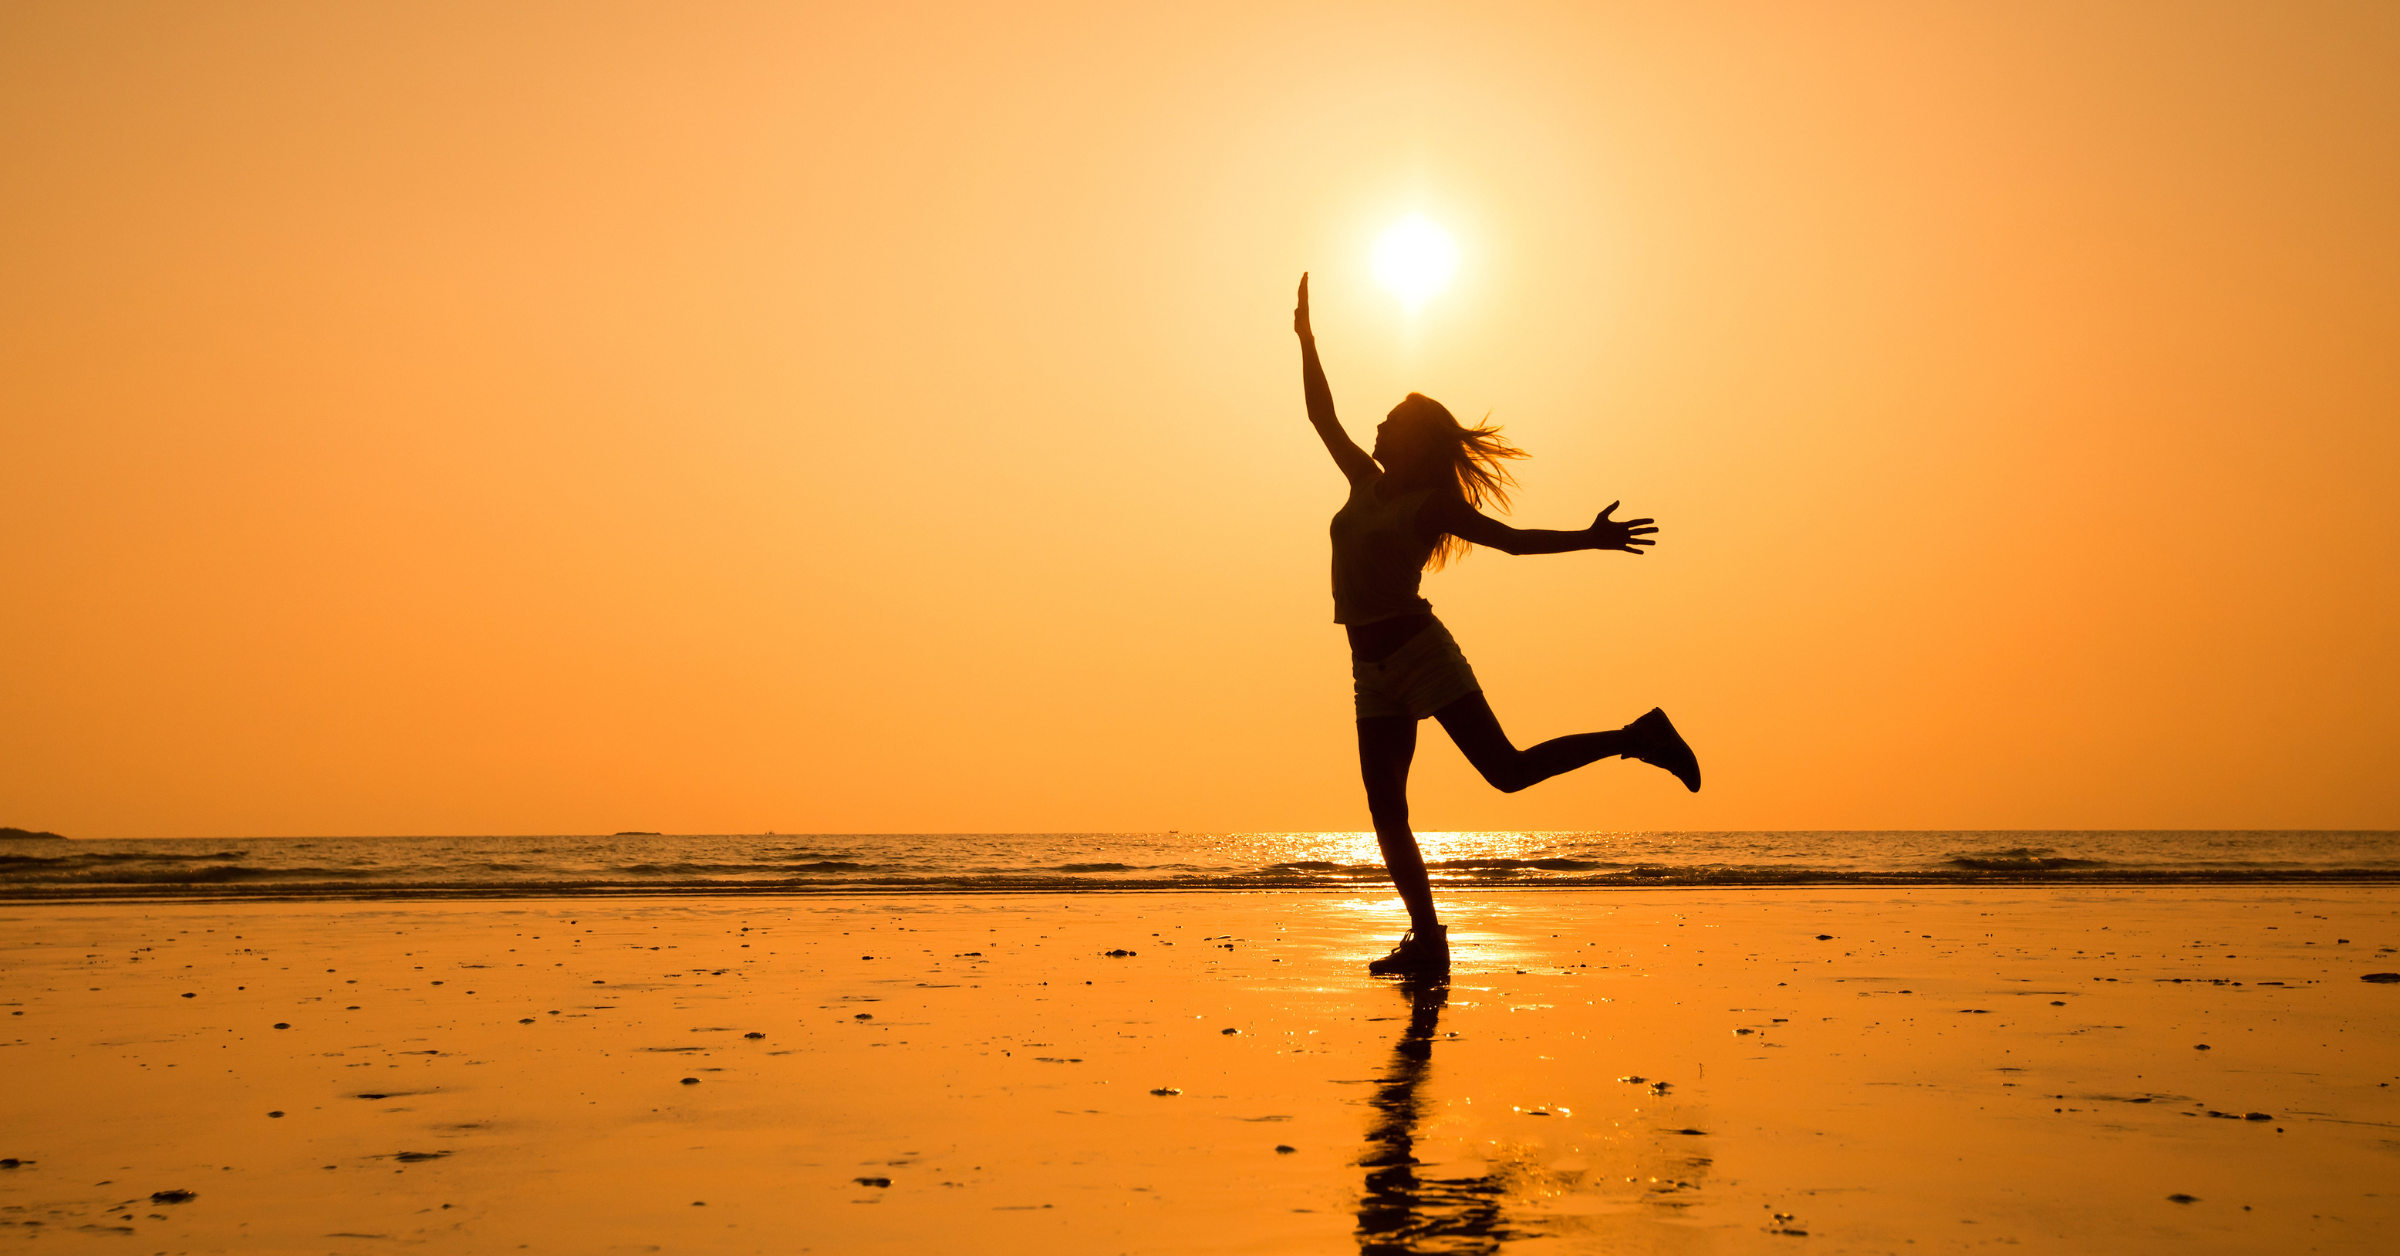 A girl walking freely in the evening sun near the ocean